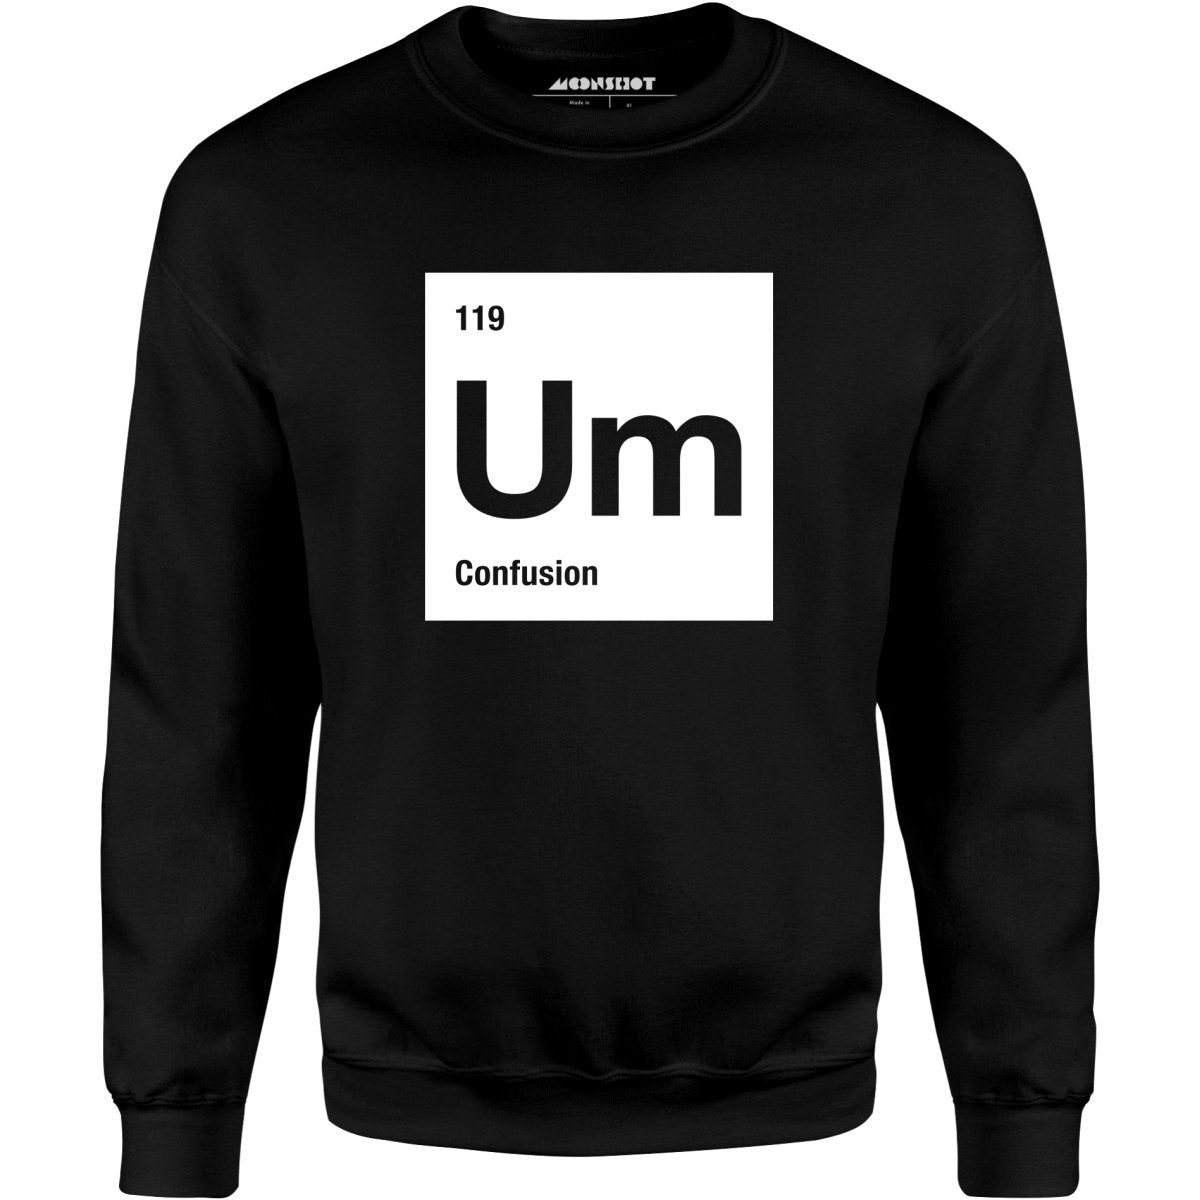 Um - The Element of Confusion - Unisex Sweatshirt